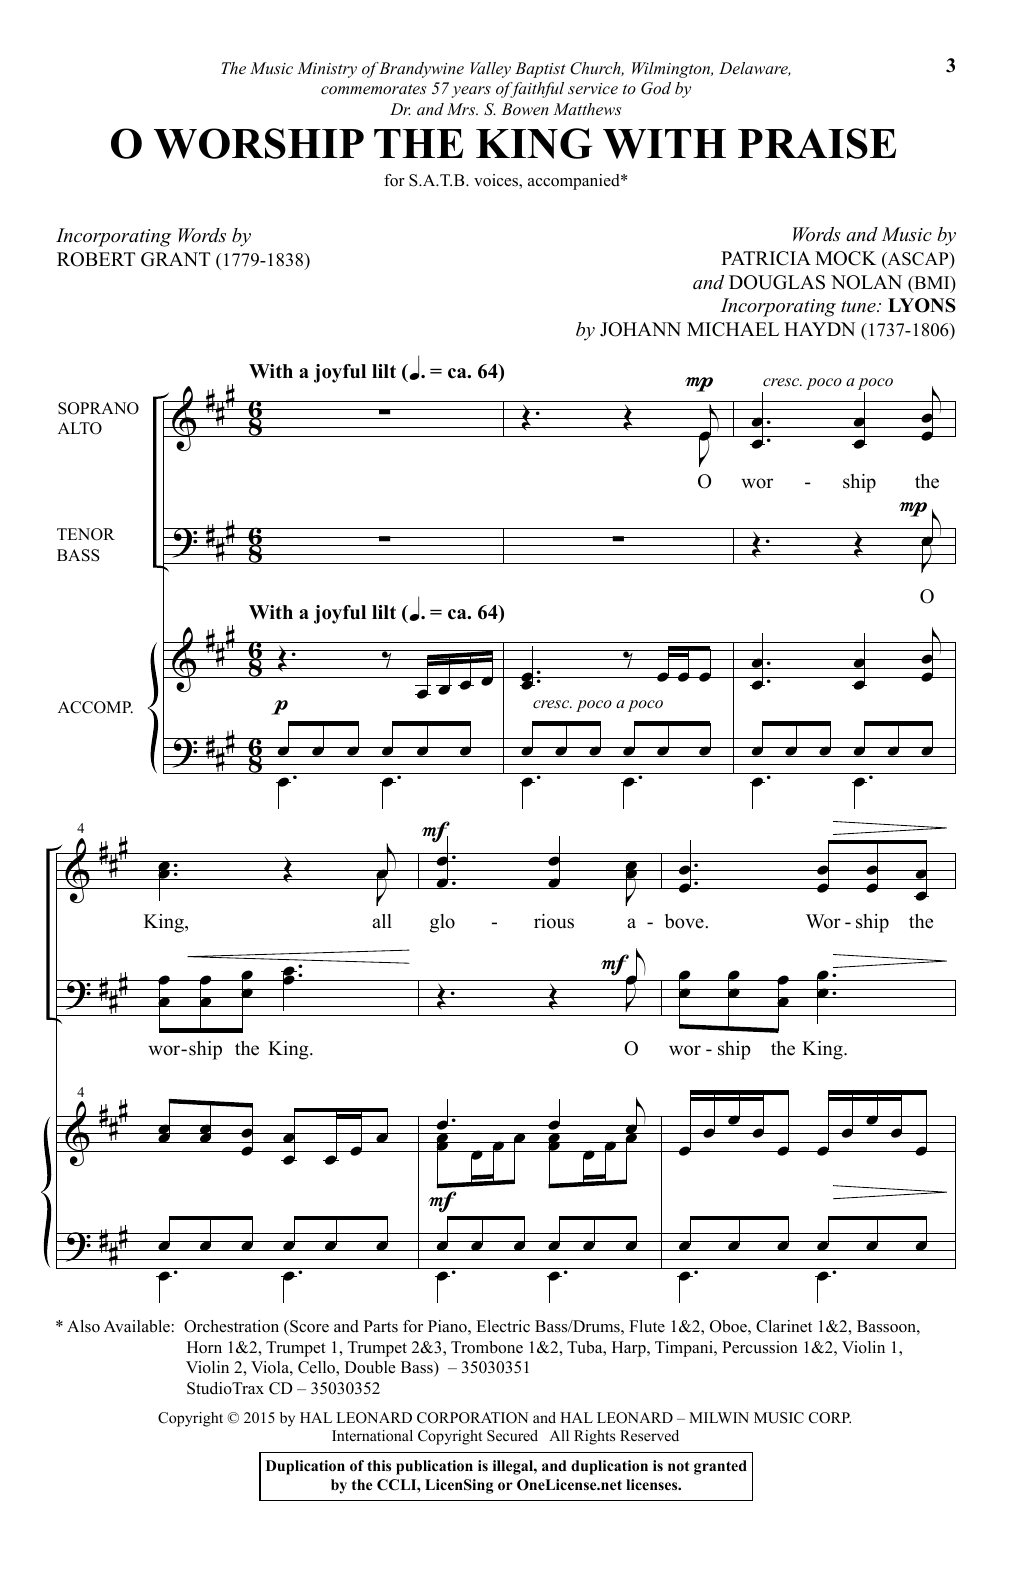 Douglas Nolan O Worship The King With Praise Sheet Music Notes & Chords for SATB - Download or Print PDF